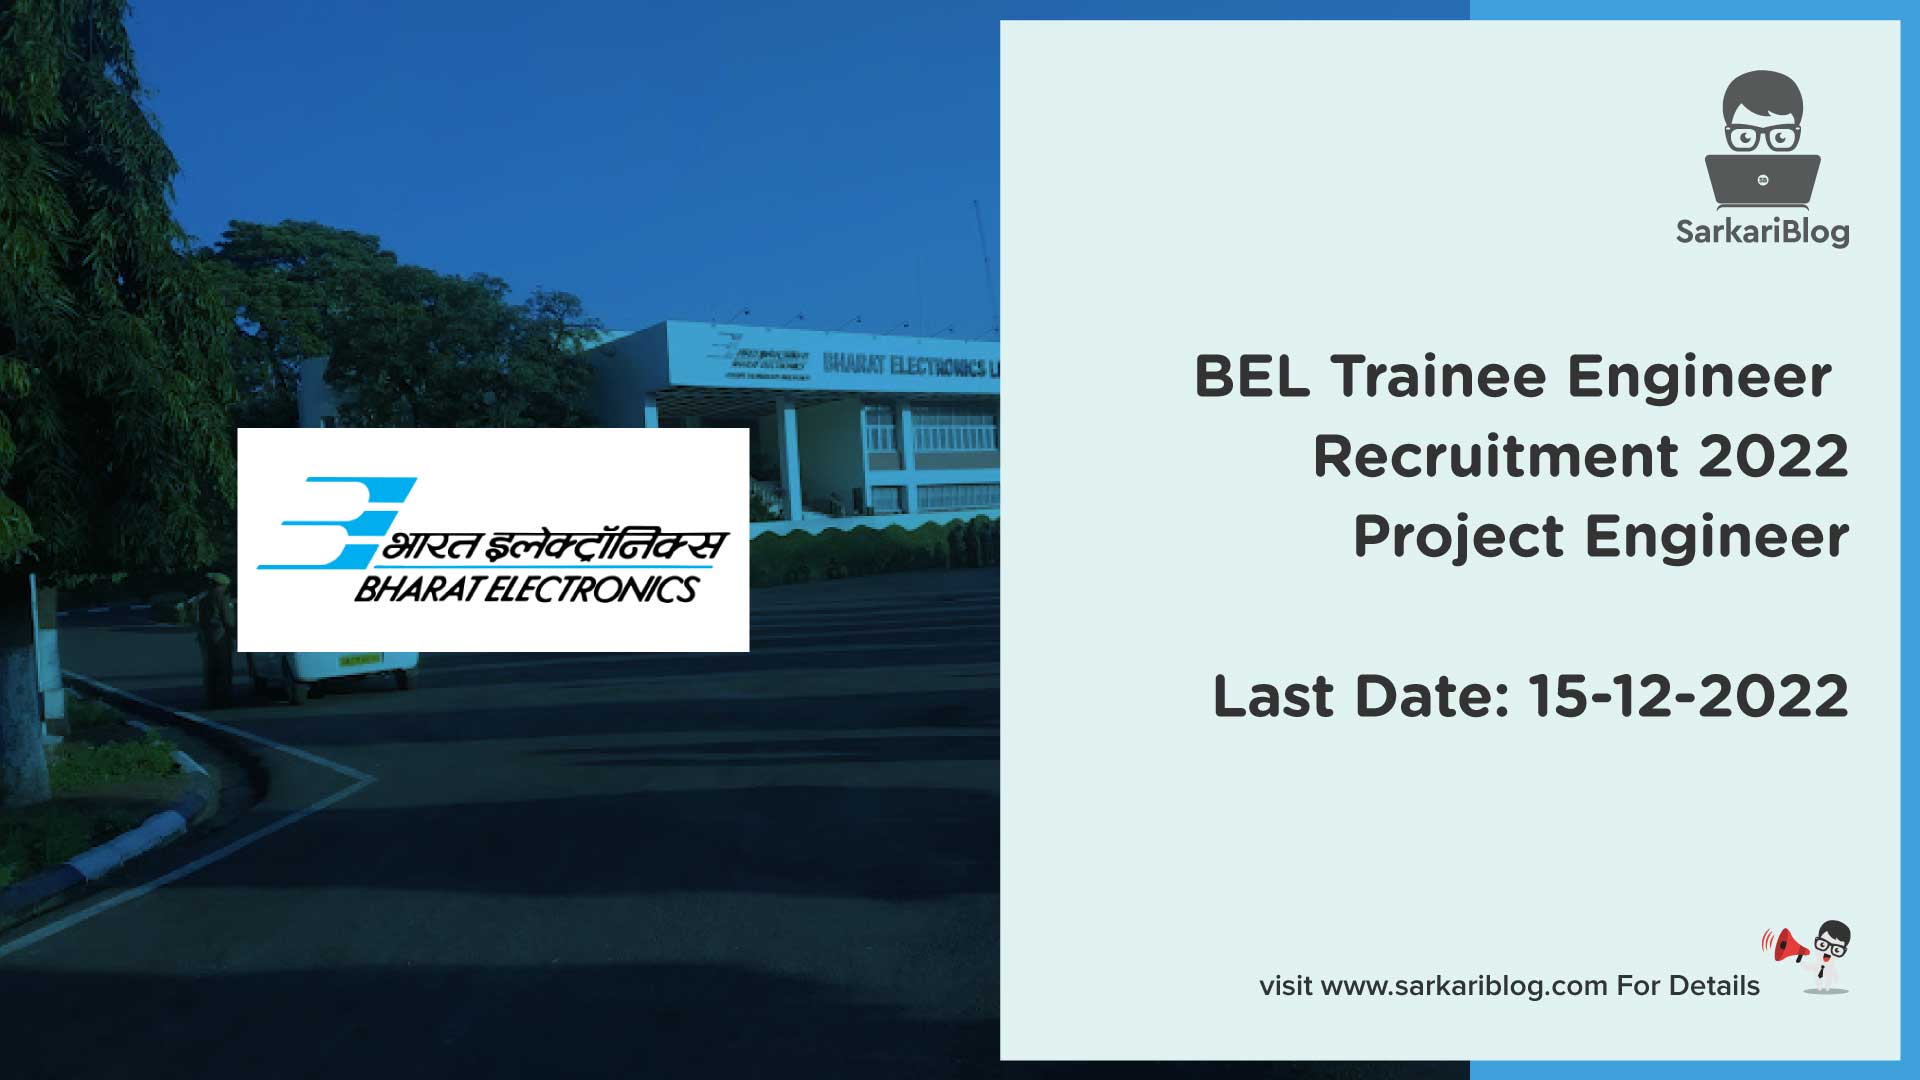 Bel Trainee Engineer Recruitment 2022